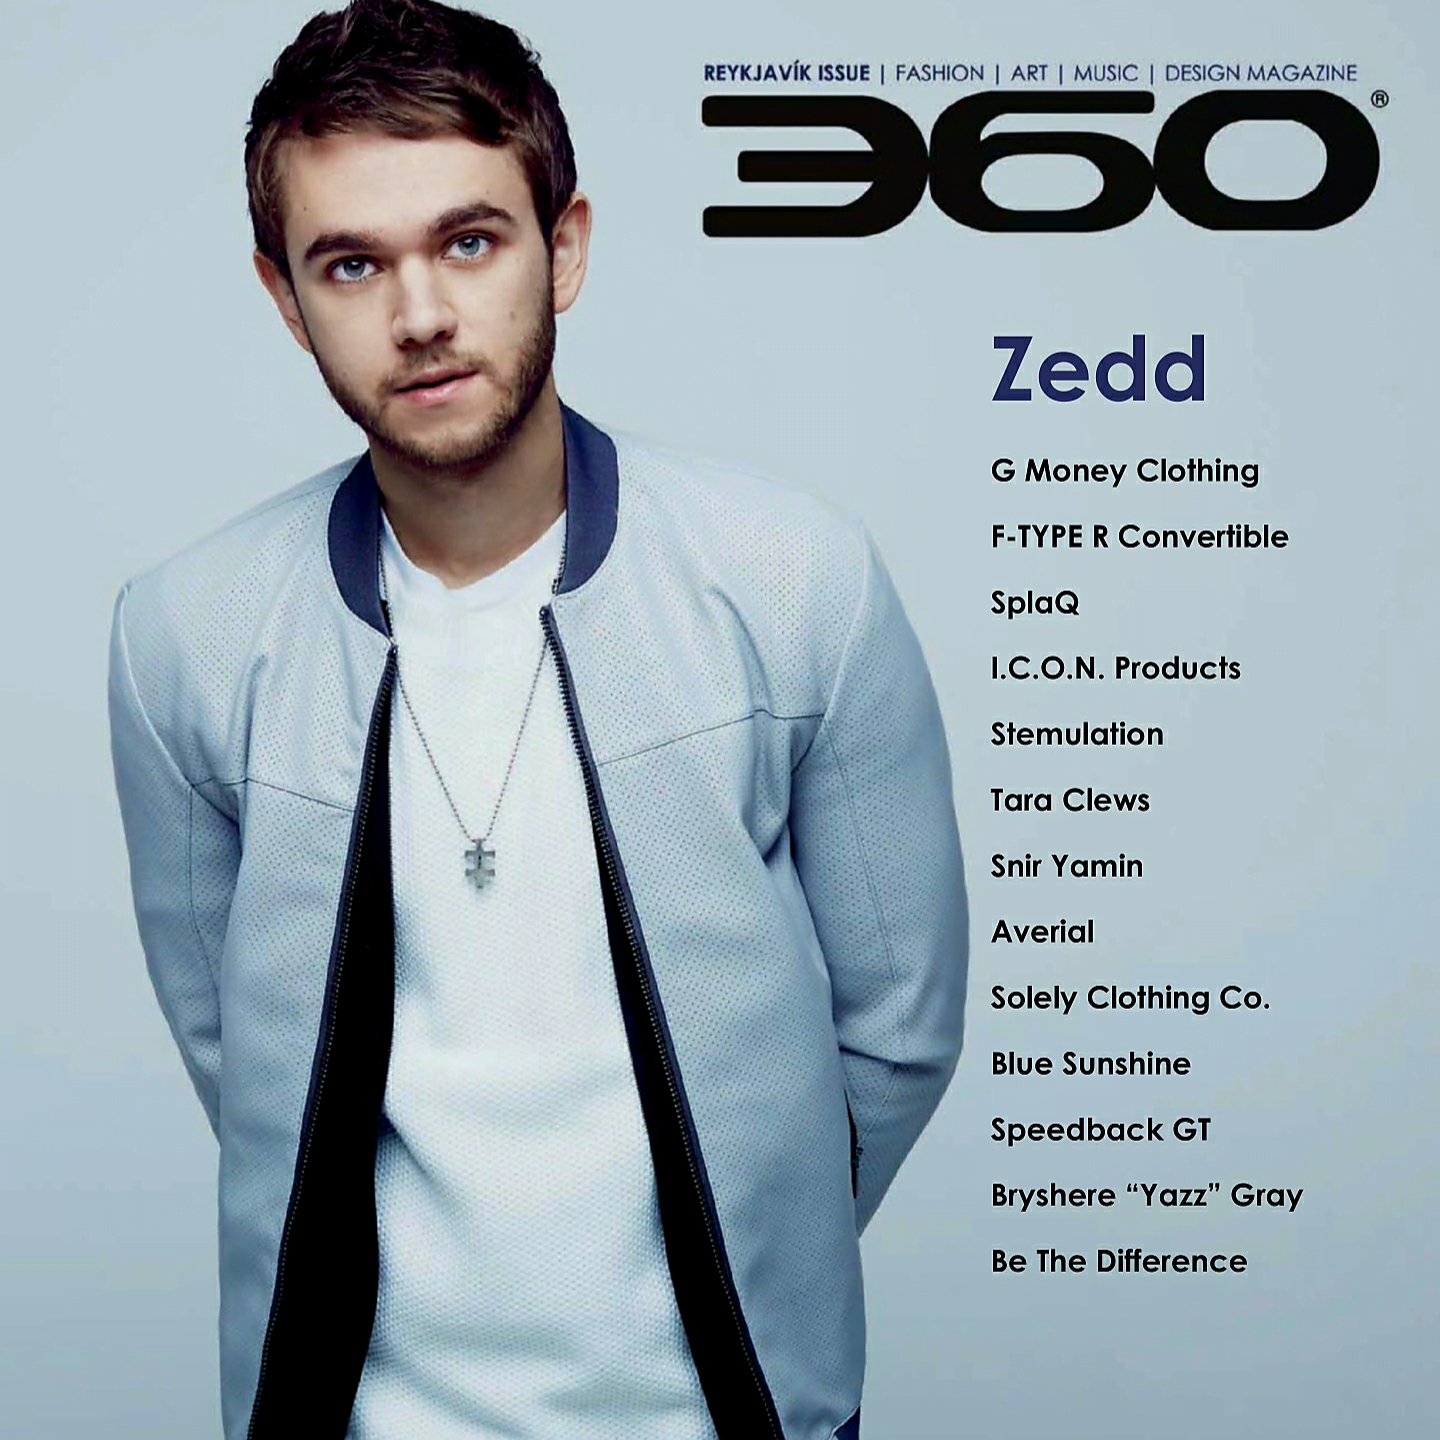 Zedd on the cover of 360 MAGAZINE